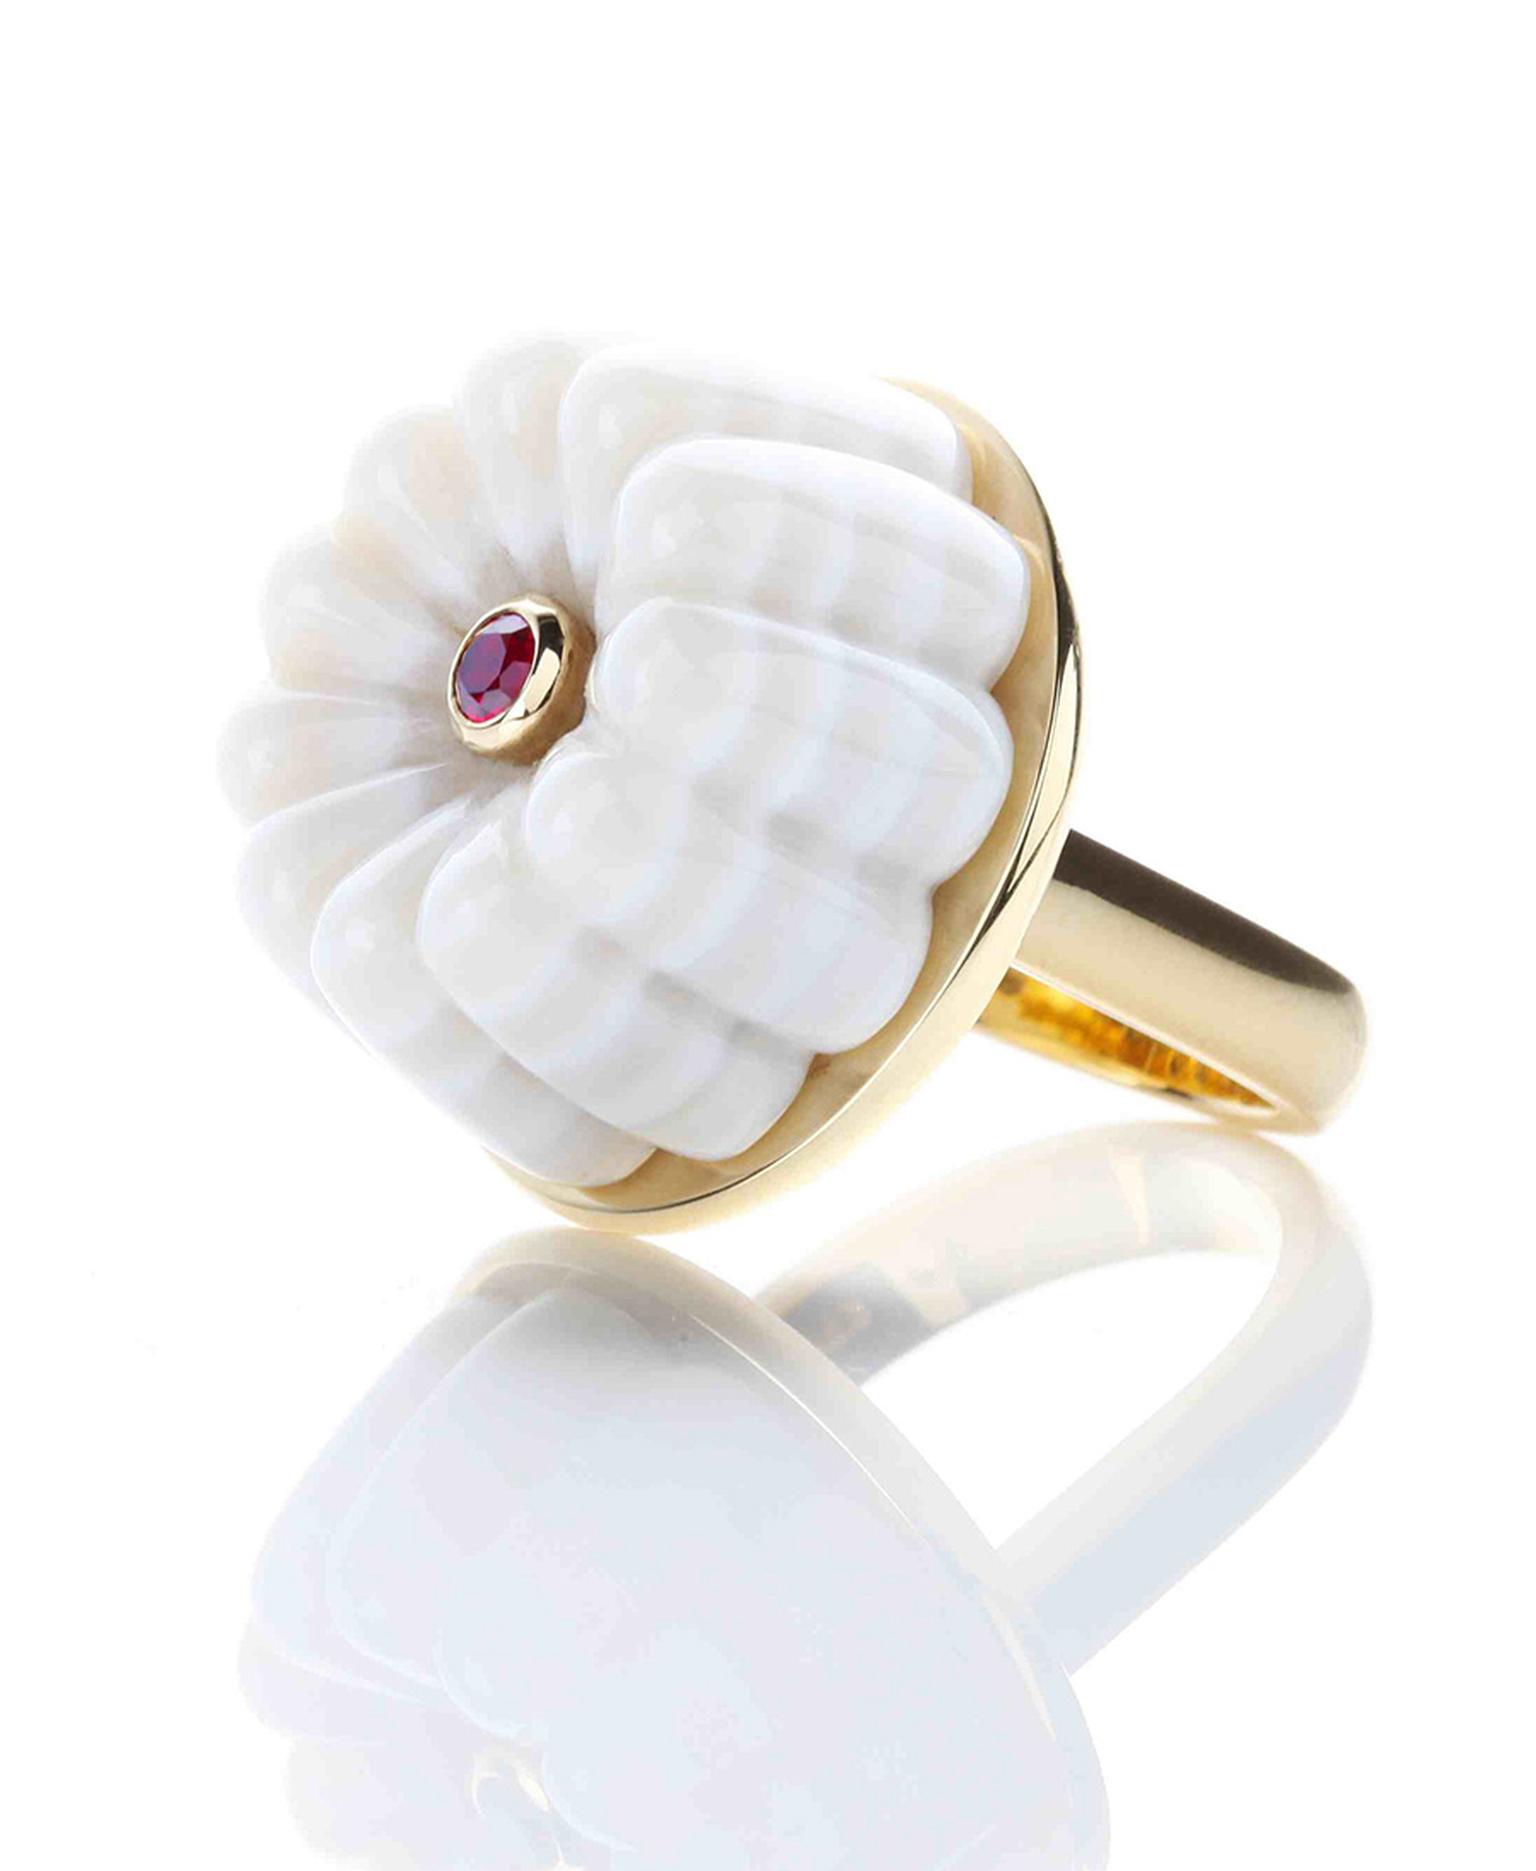 Cora-Sheibani-jelly-&-guglehopf-rings--£3500--£4200.jpg